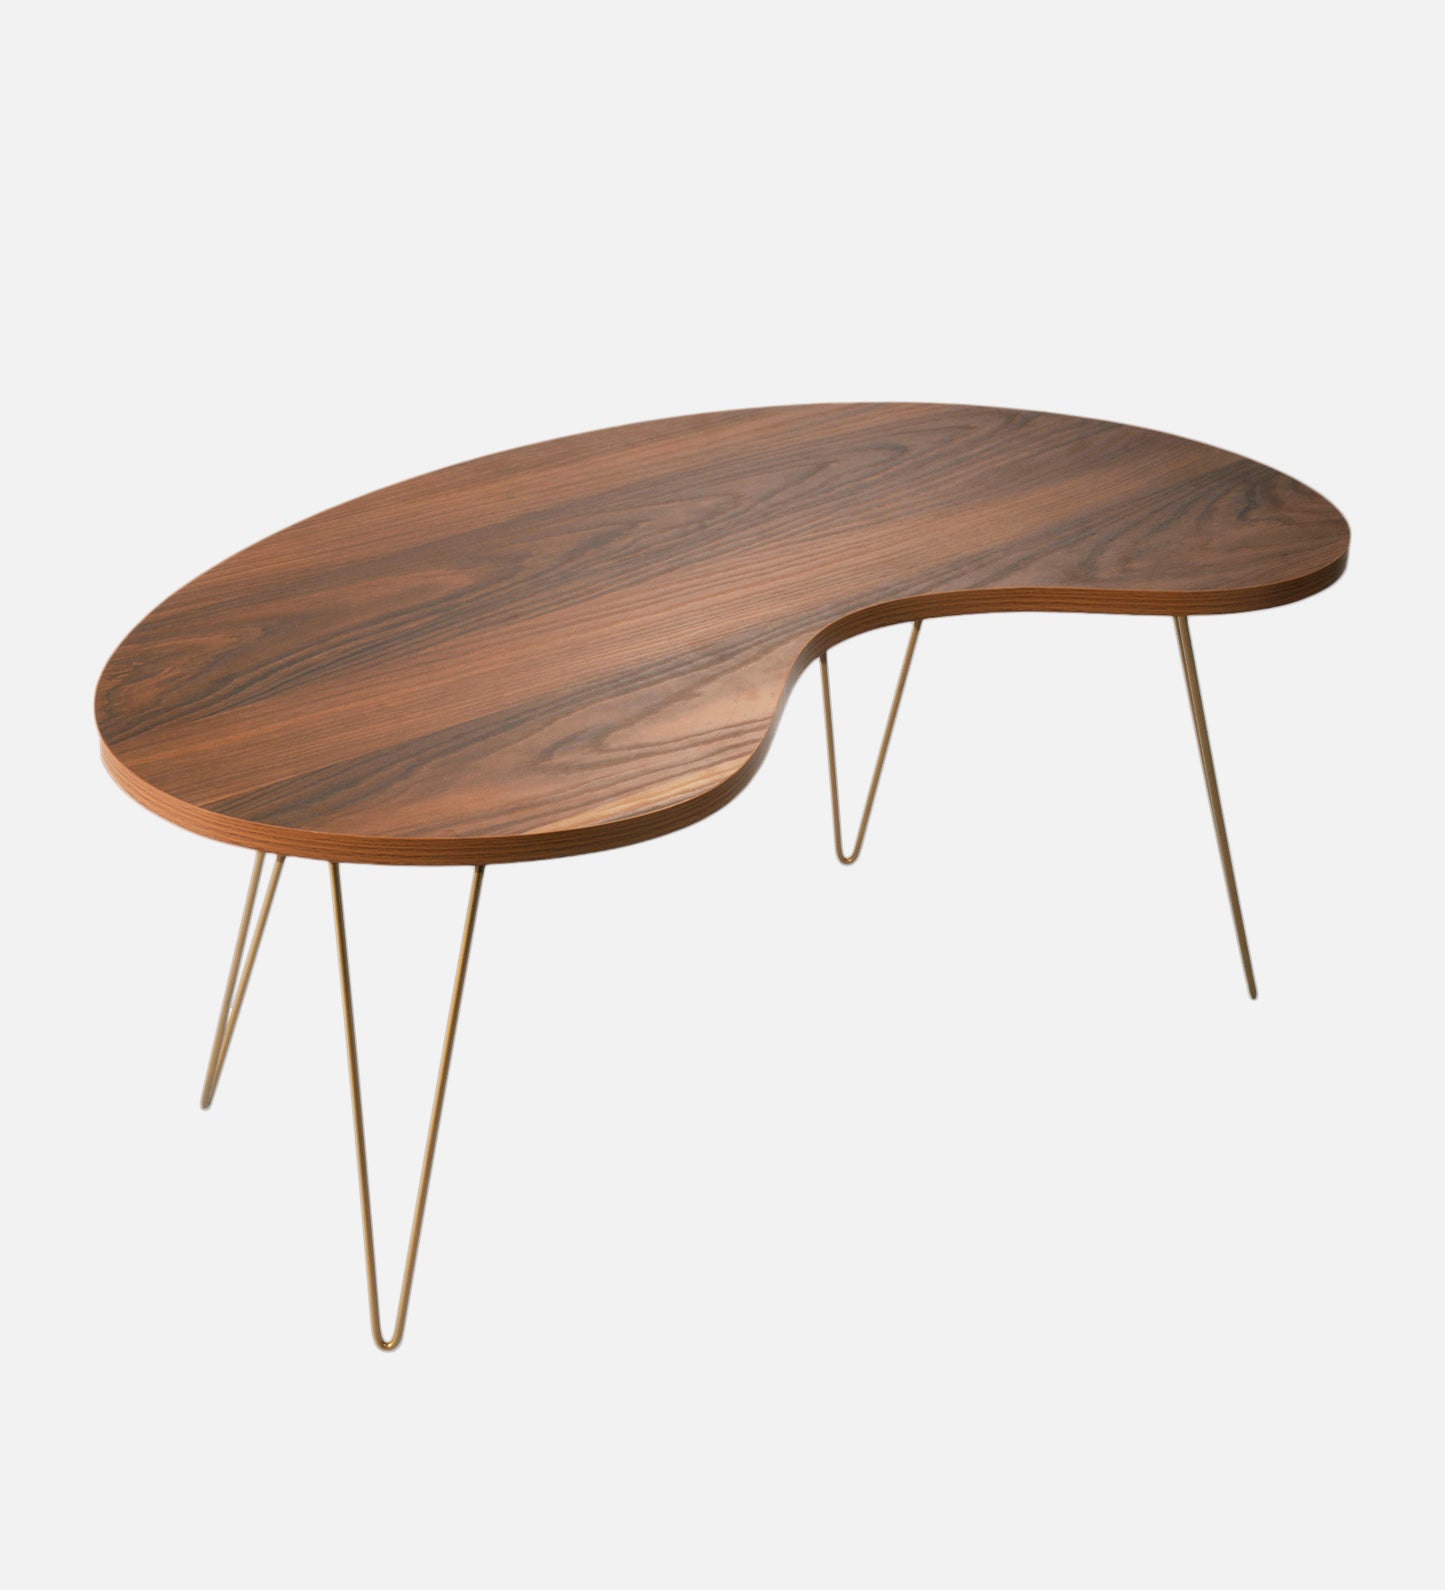 Teak Hues Bean Shape Coffee Tables, Wooden Tables, Coffee Tables, Center Tables, Living Room Decor by A Tiny Mistake